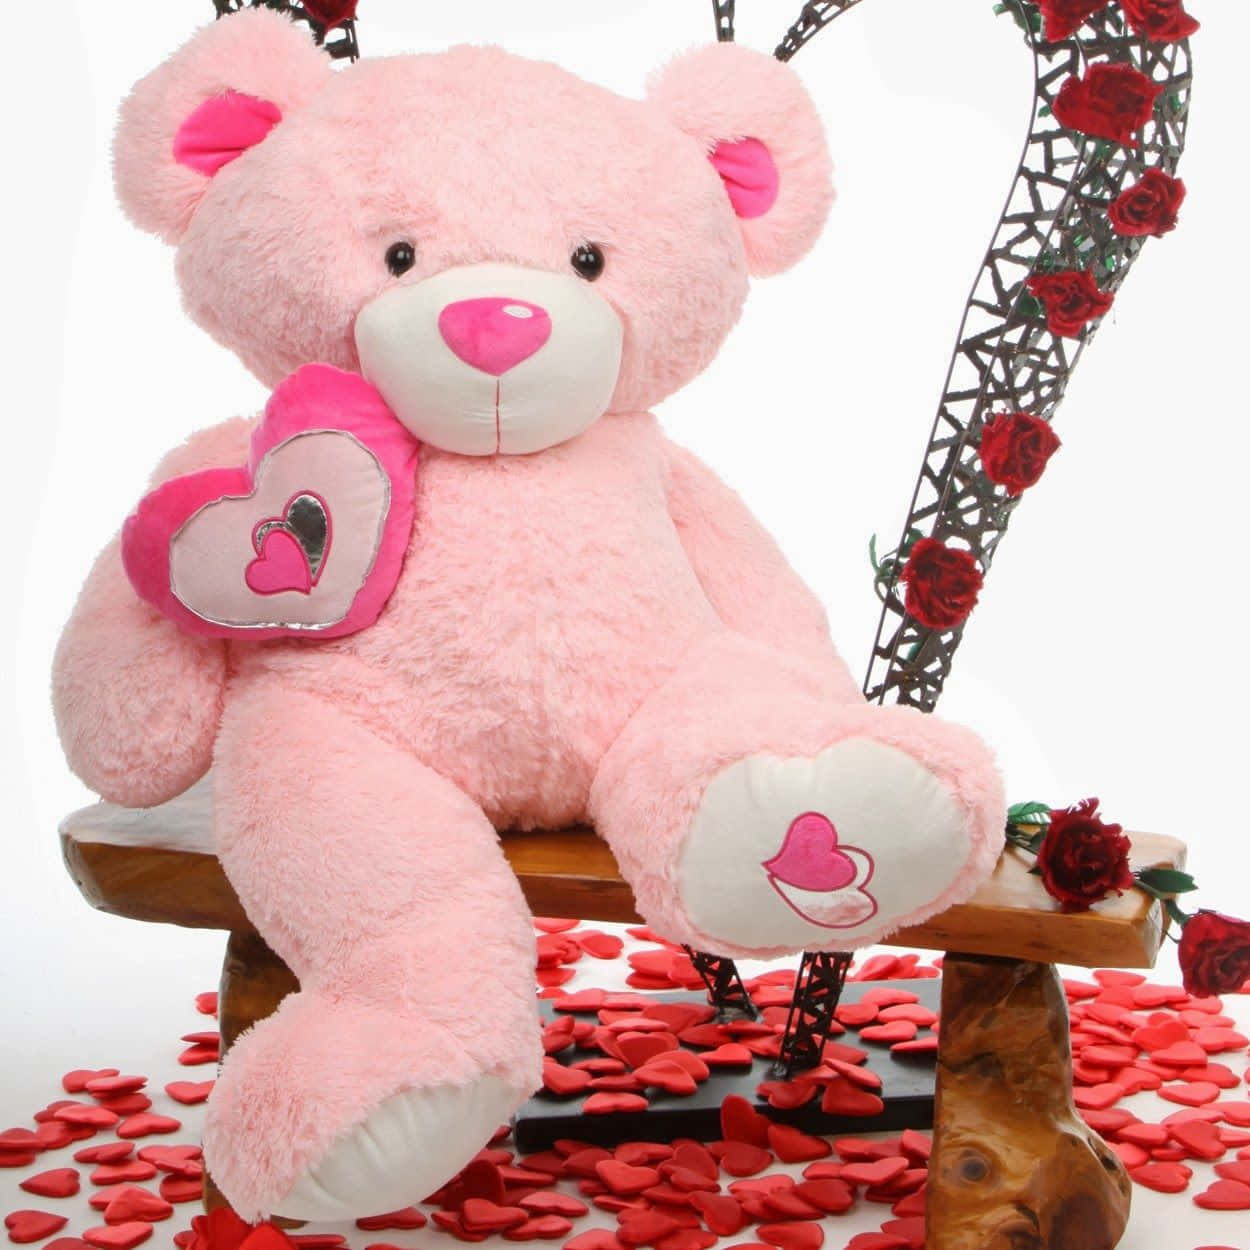 Cute Pink Teddy Bear Flowers